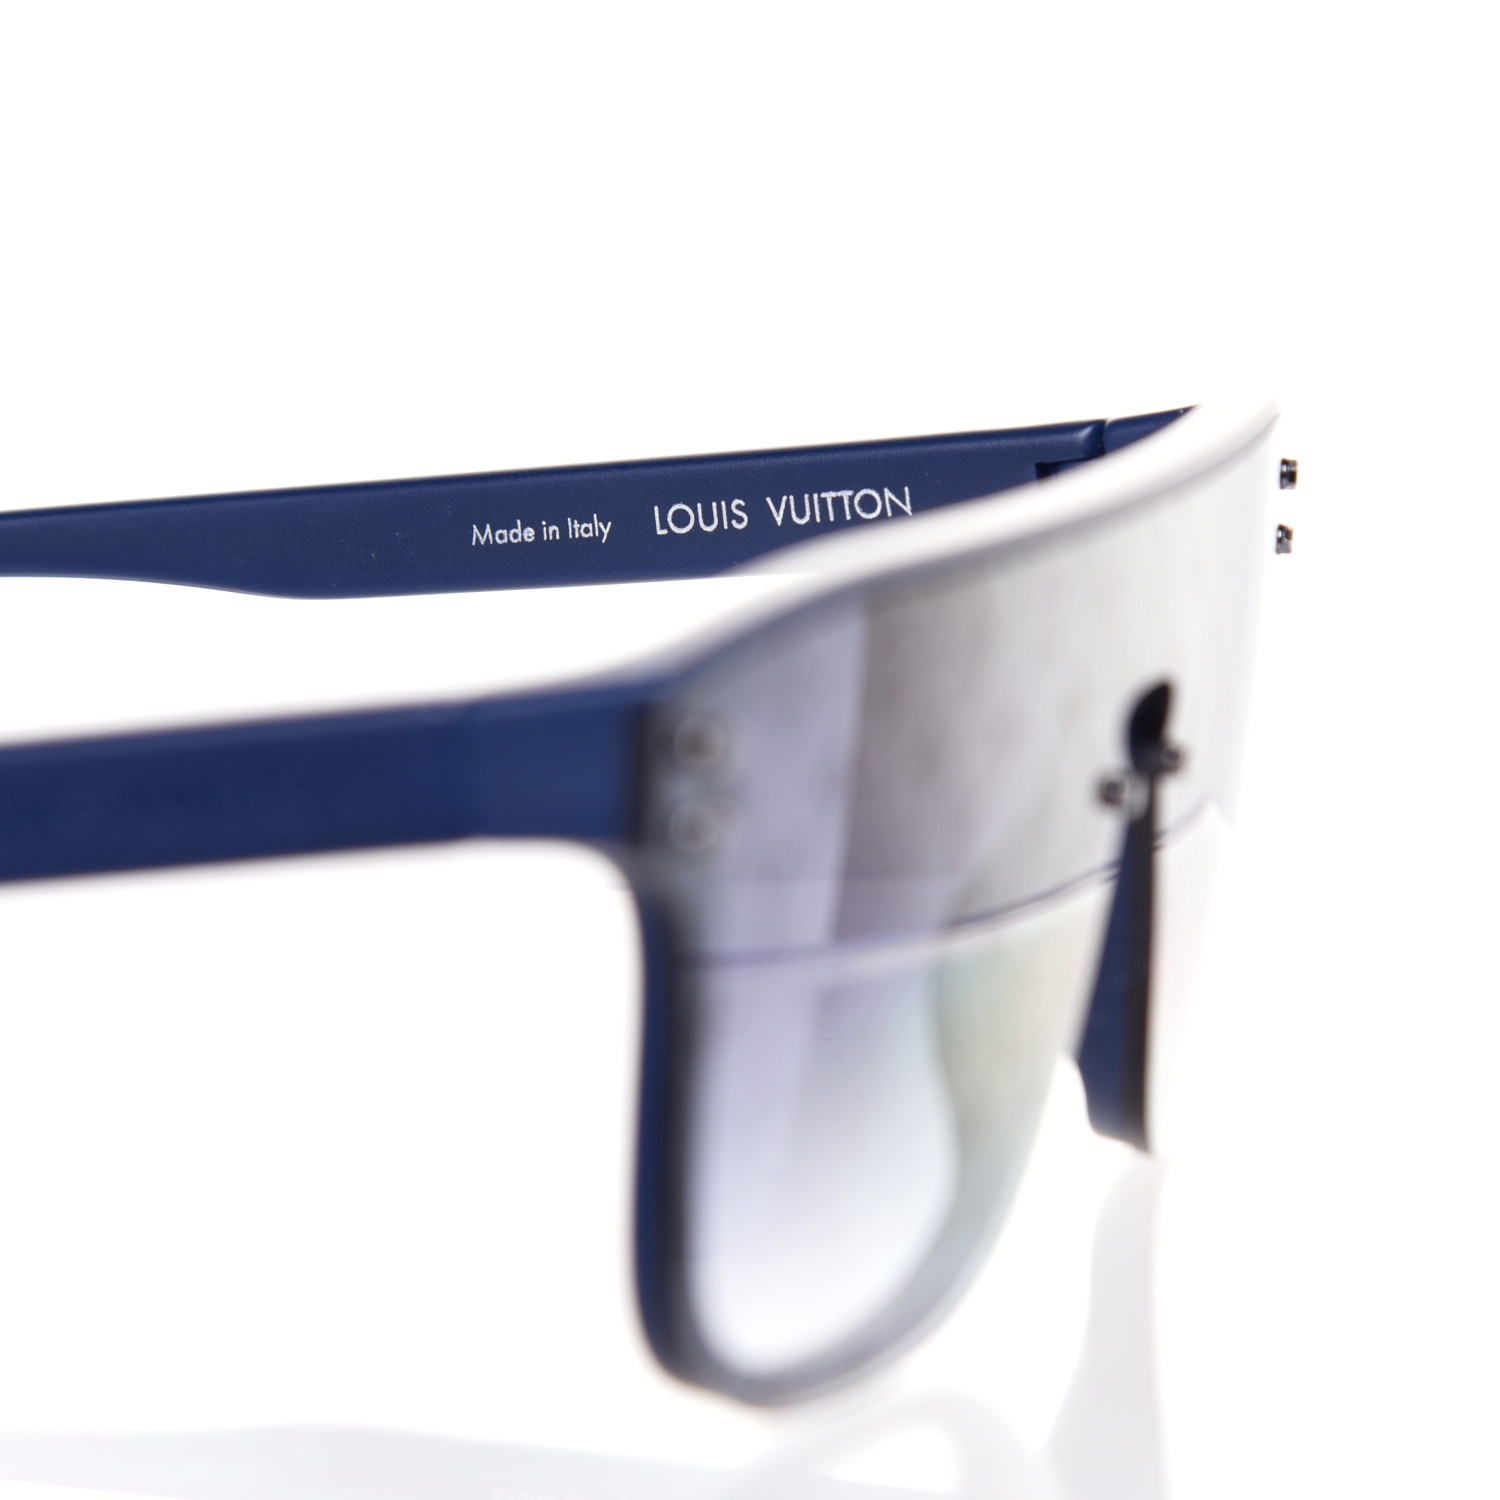 Louis Vuitton 1.1 Evidence Sunglasses 2021-22FW, Black